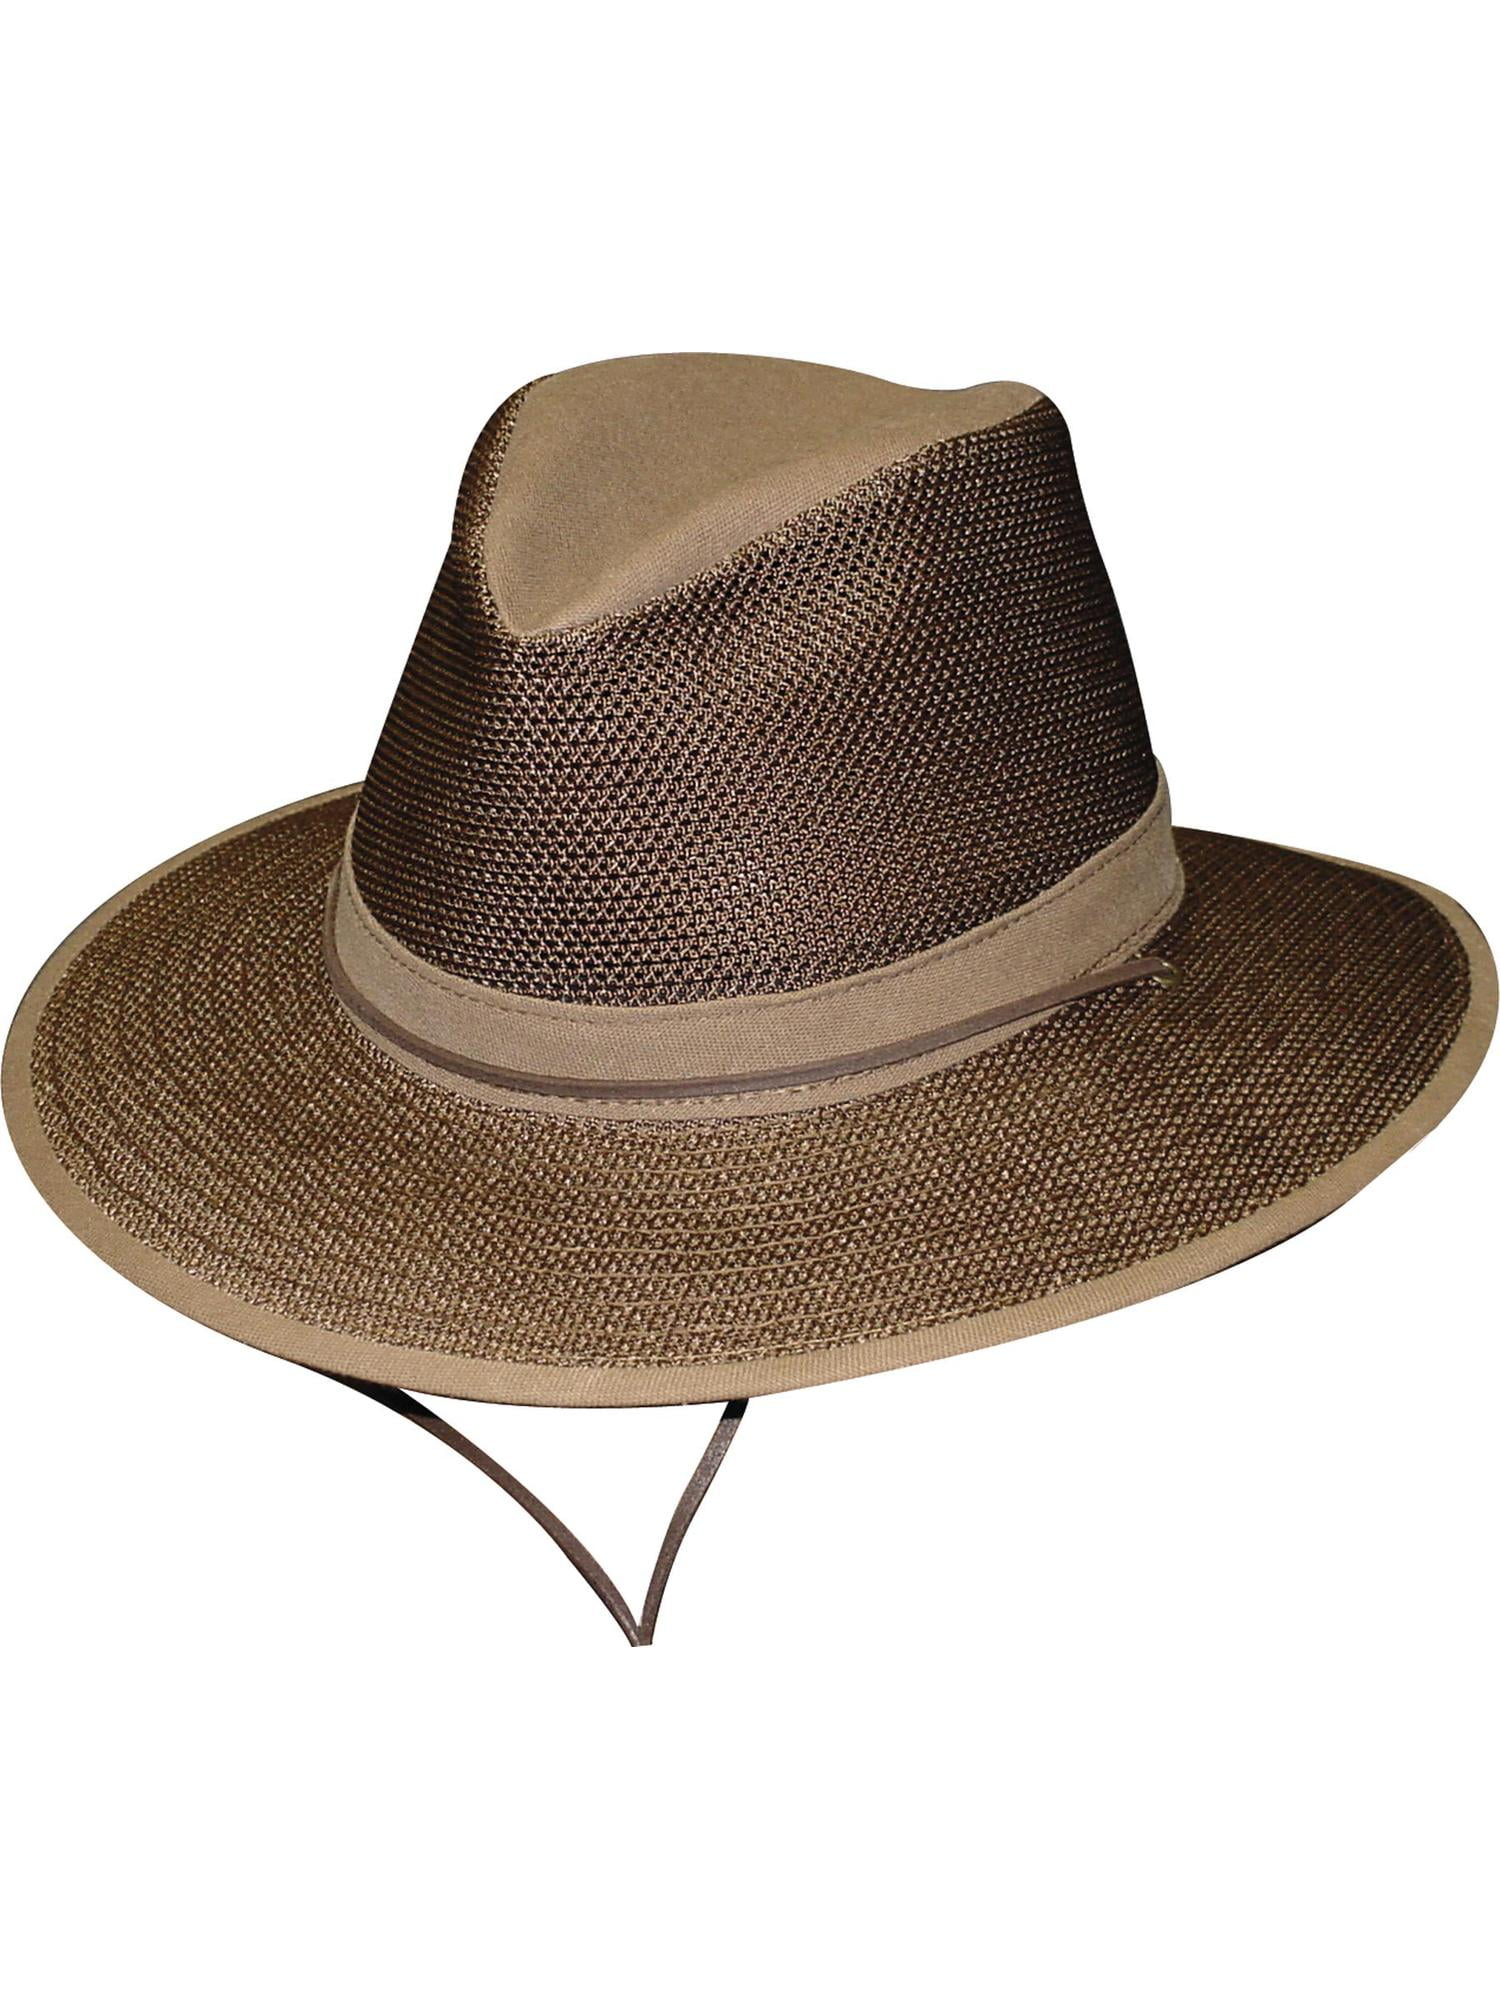 Henschel Polycotton Packable Mesh Breezer Safari Hat (Men's) - Walmart.com